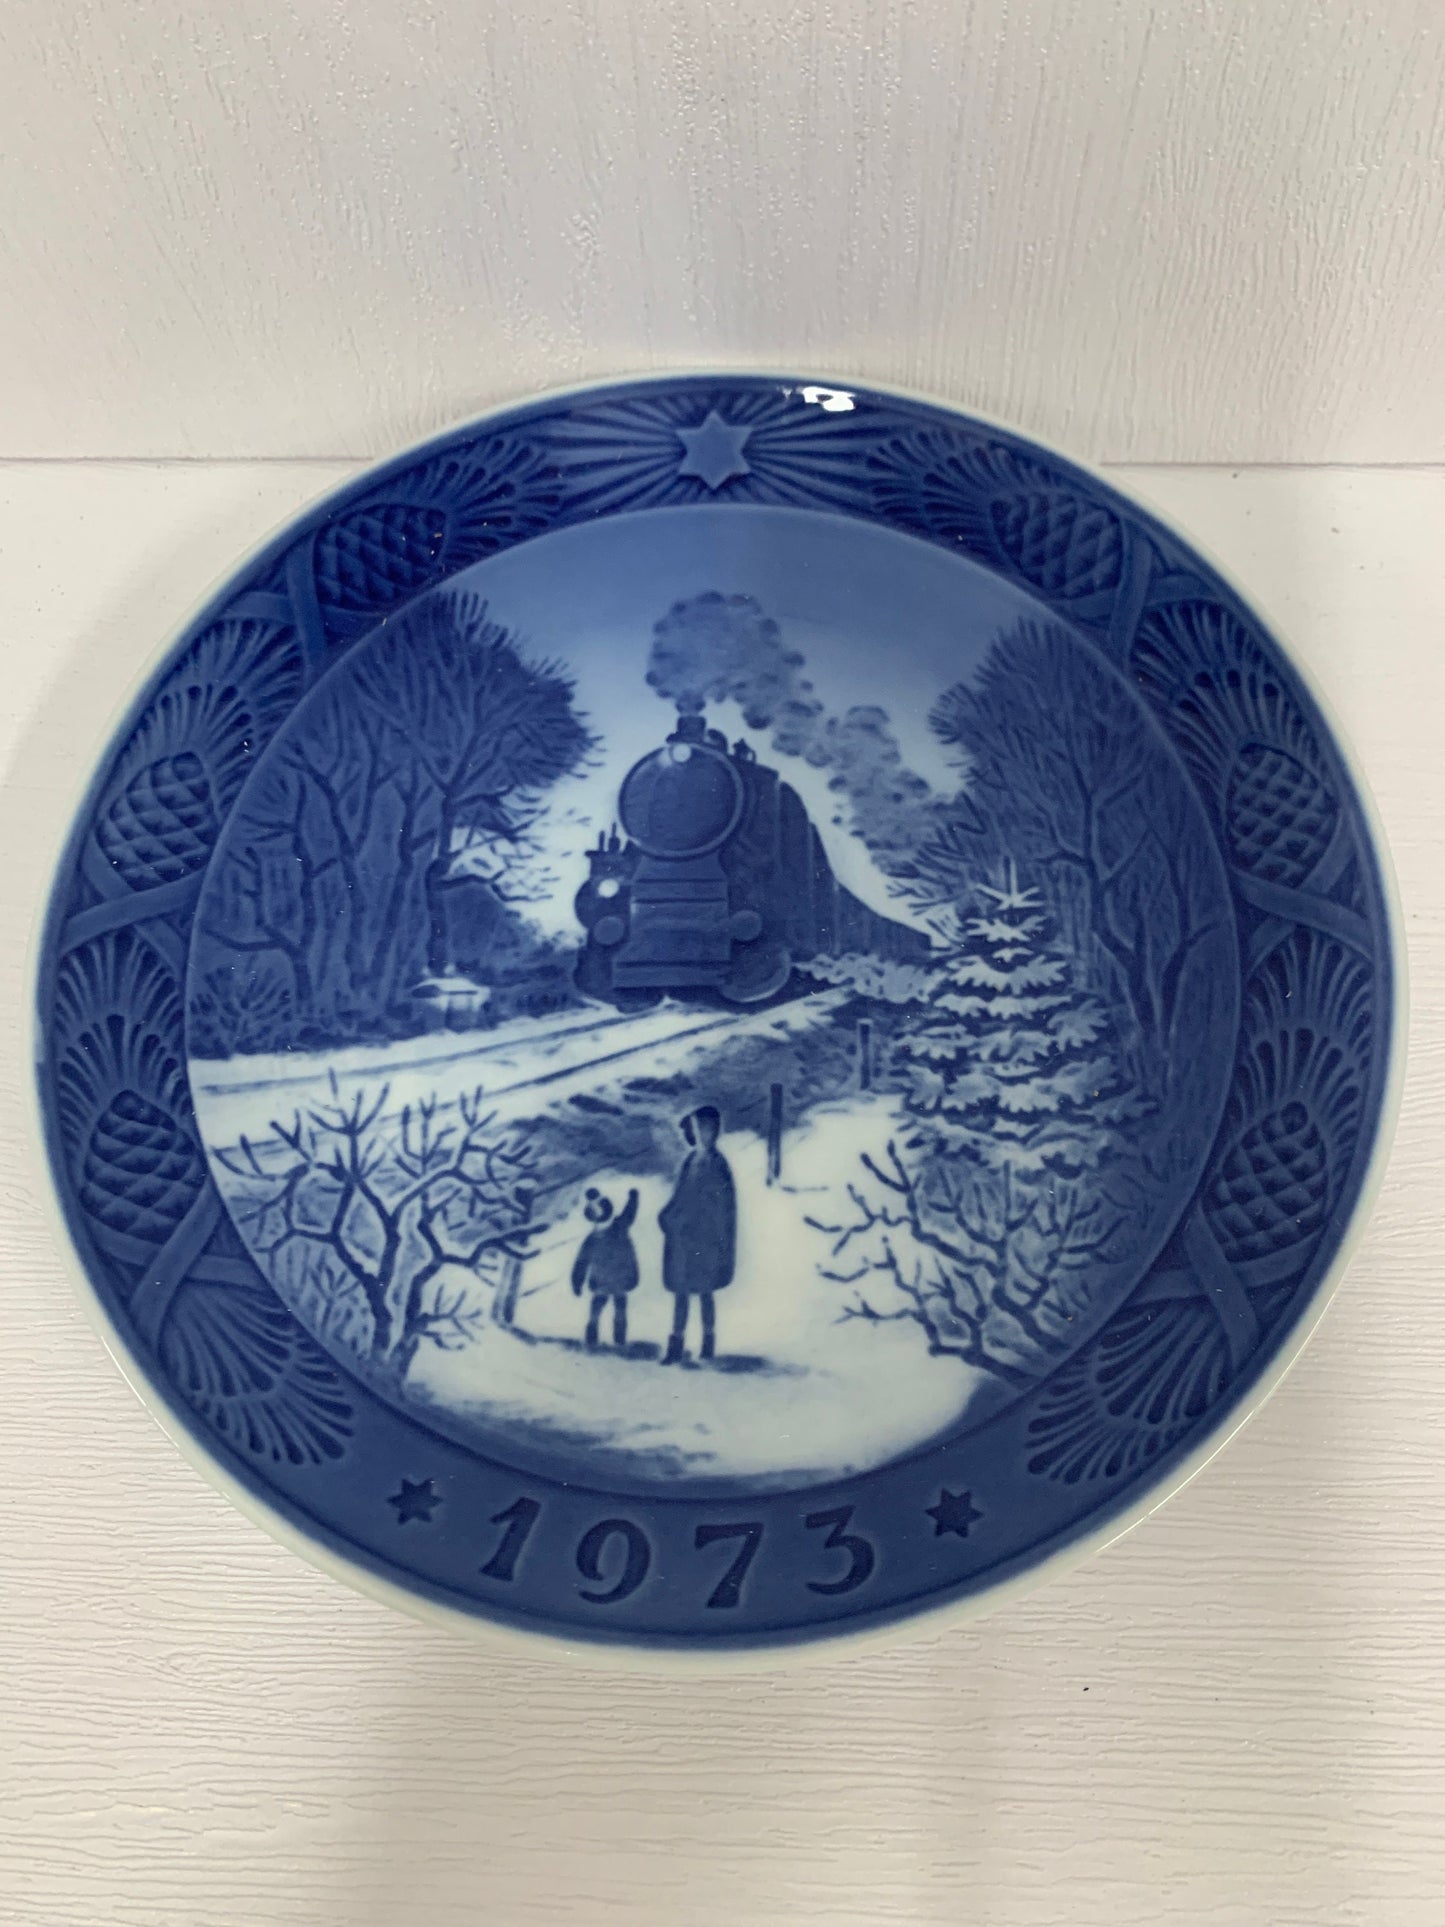 Royal Copenhagen Plates 1973 for christmas 19cm diameter and wedgwood Guam 12cm  2 plates